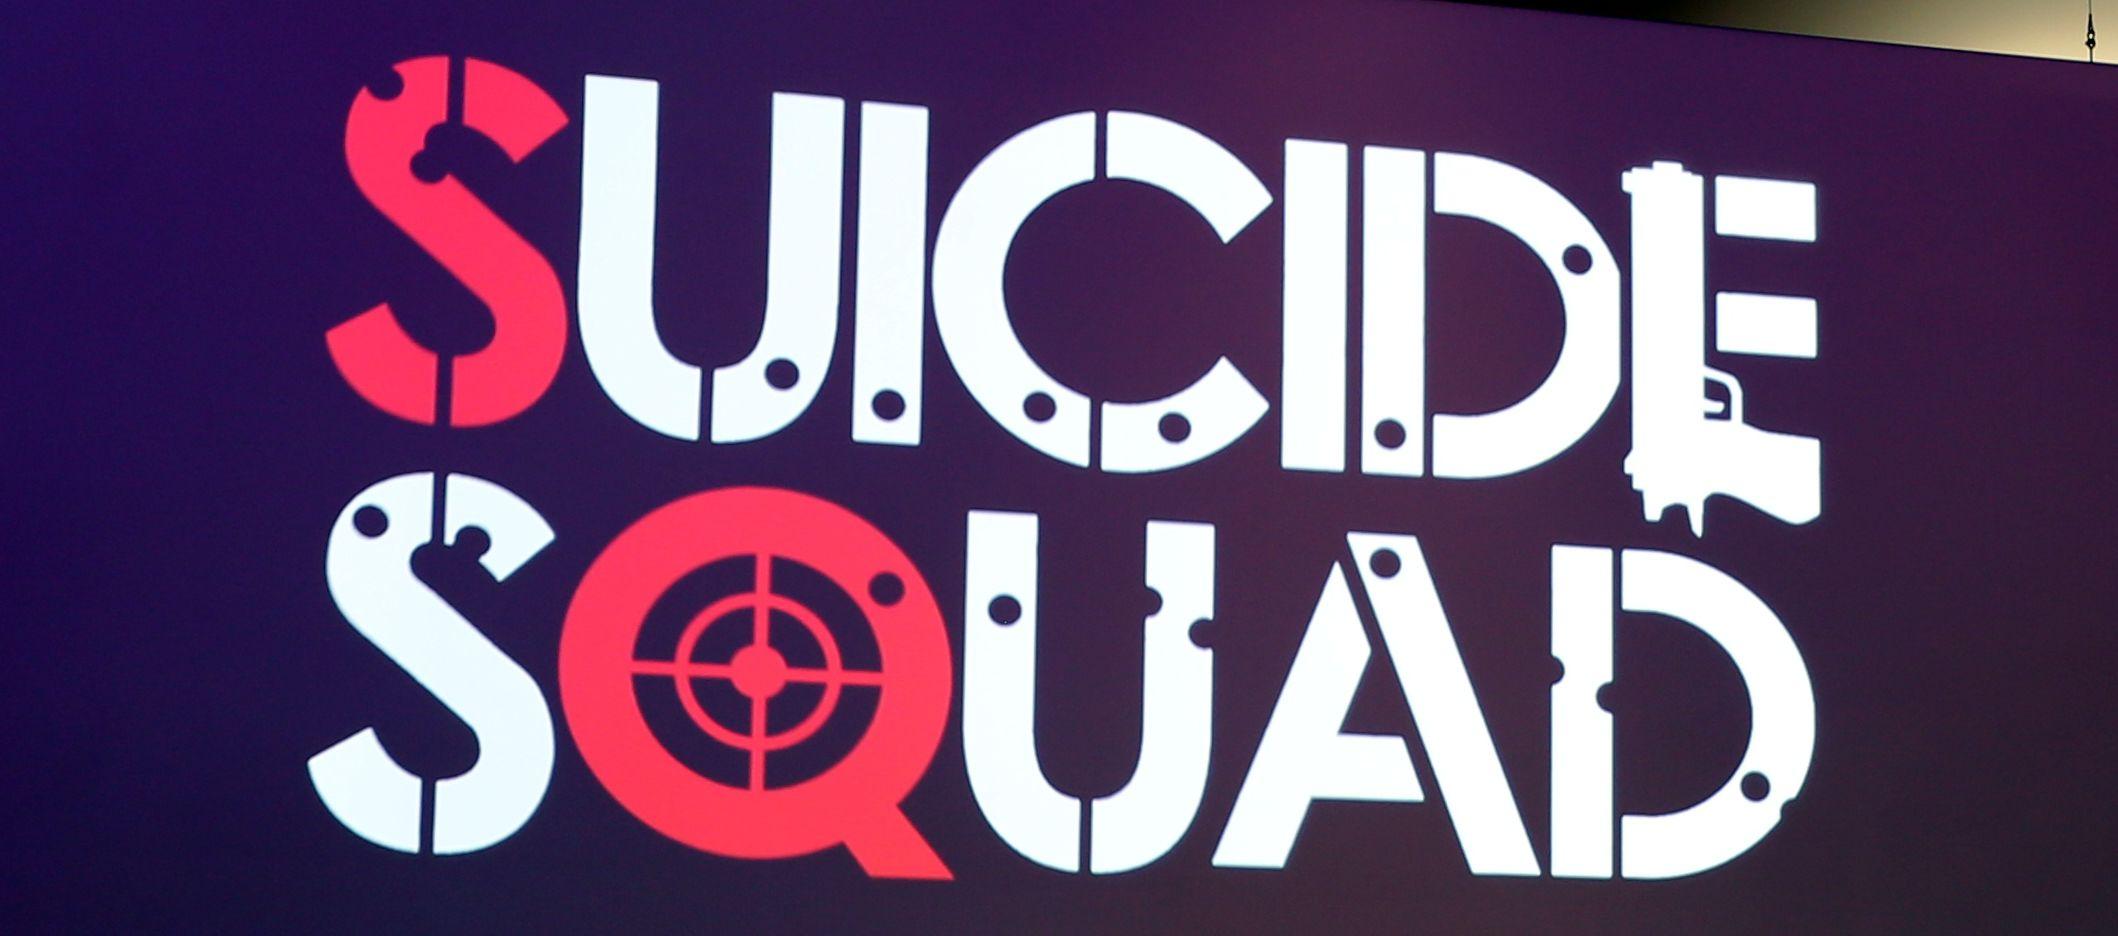 Cool Movie Logo - Suicide Squad Movie Logo Revealed | Collider